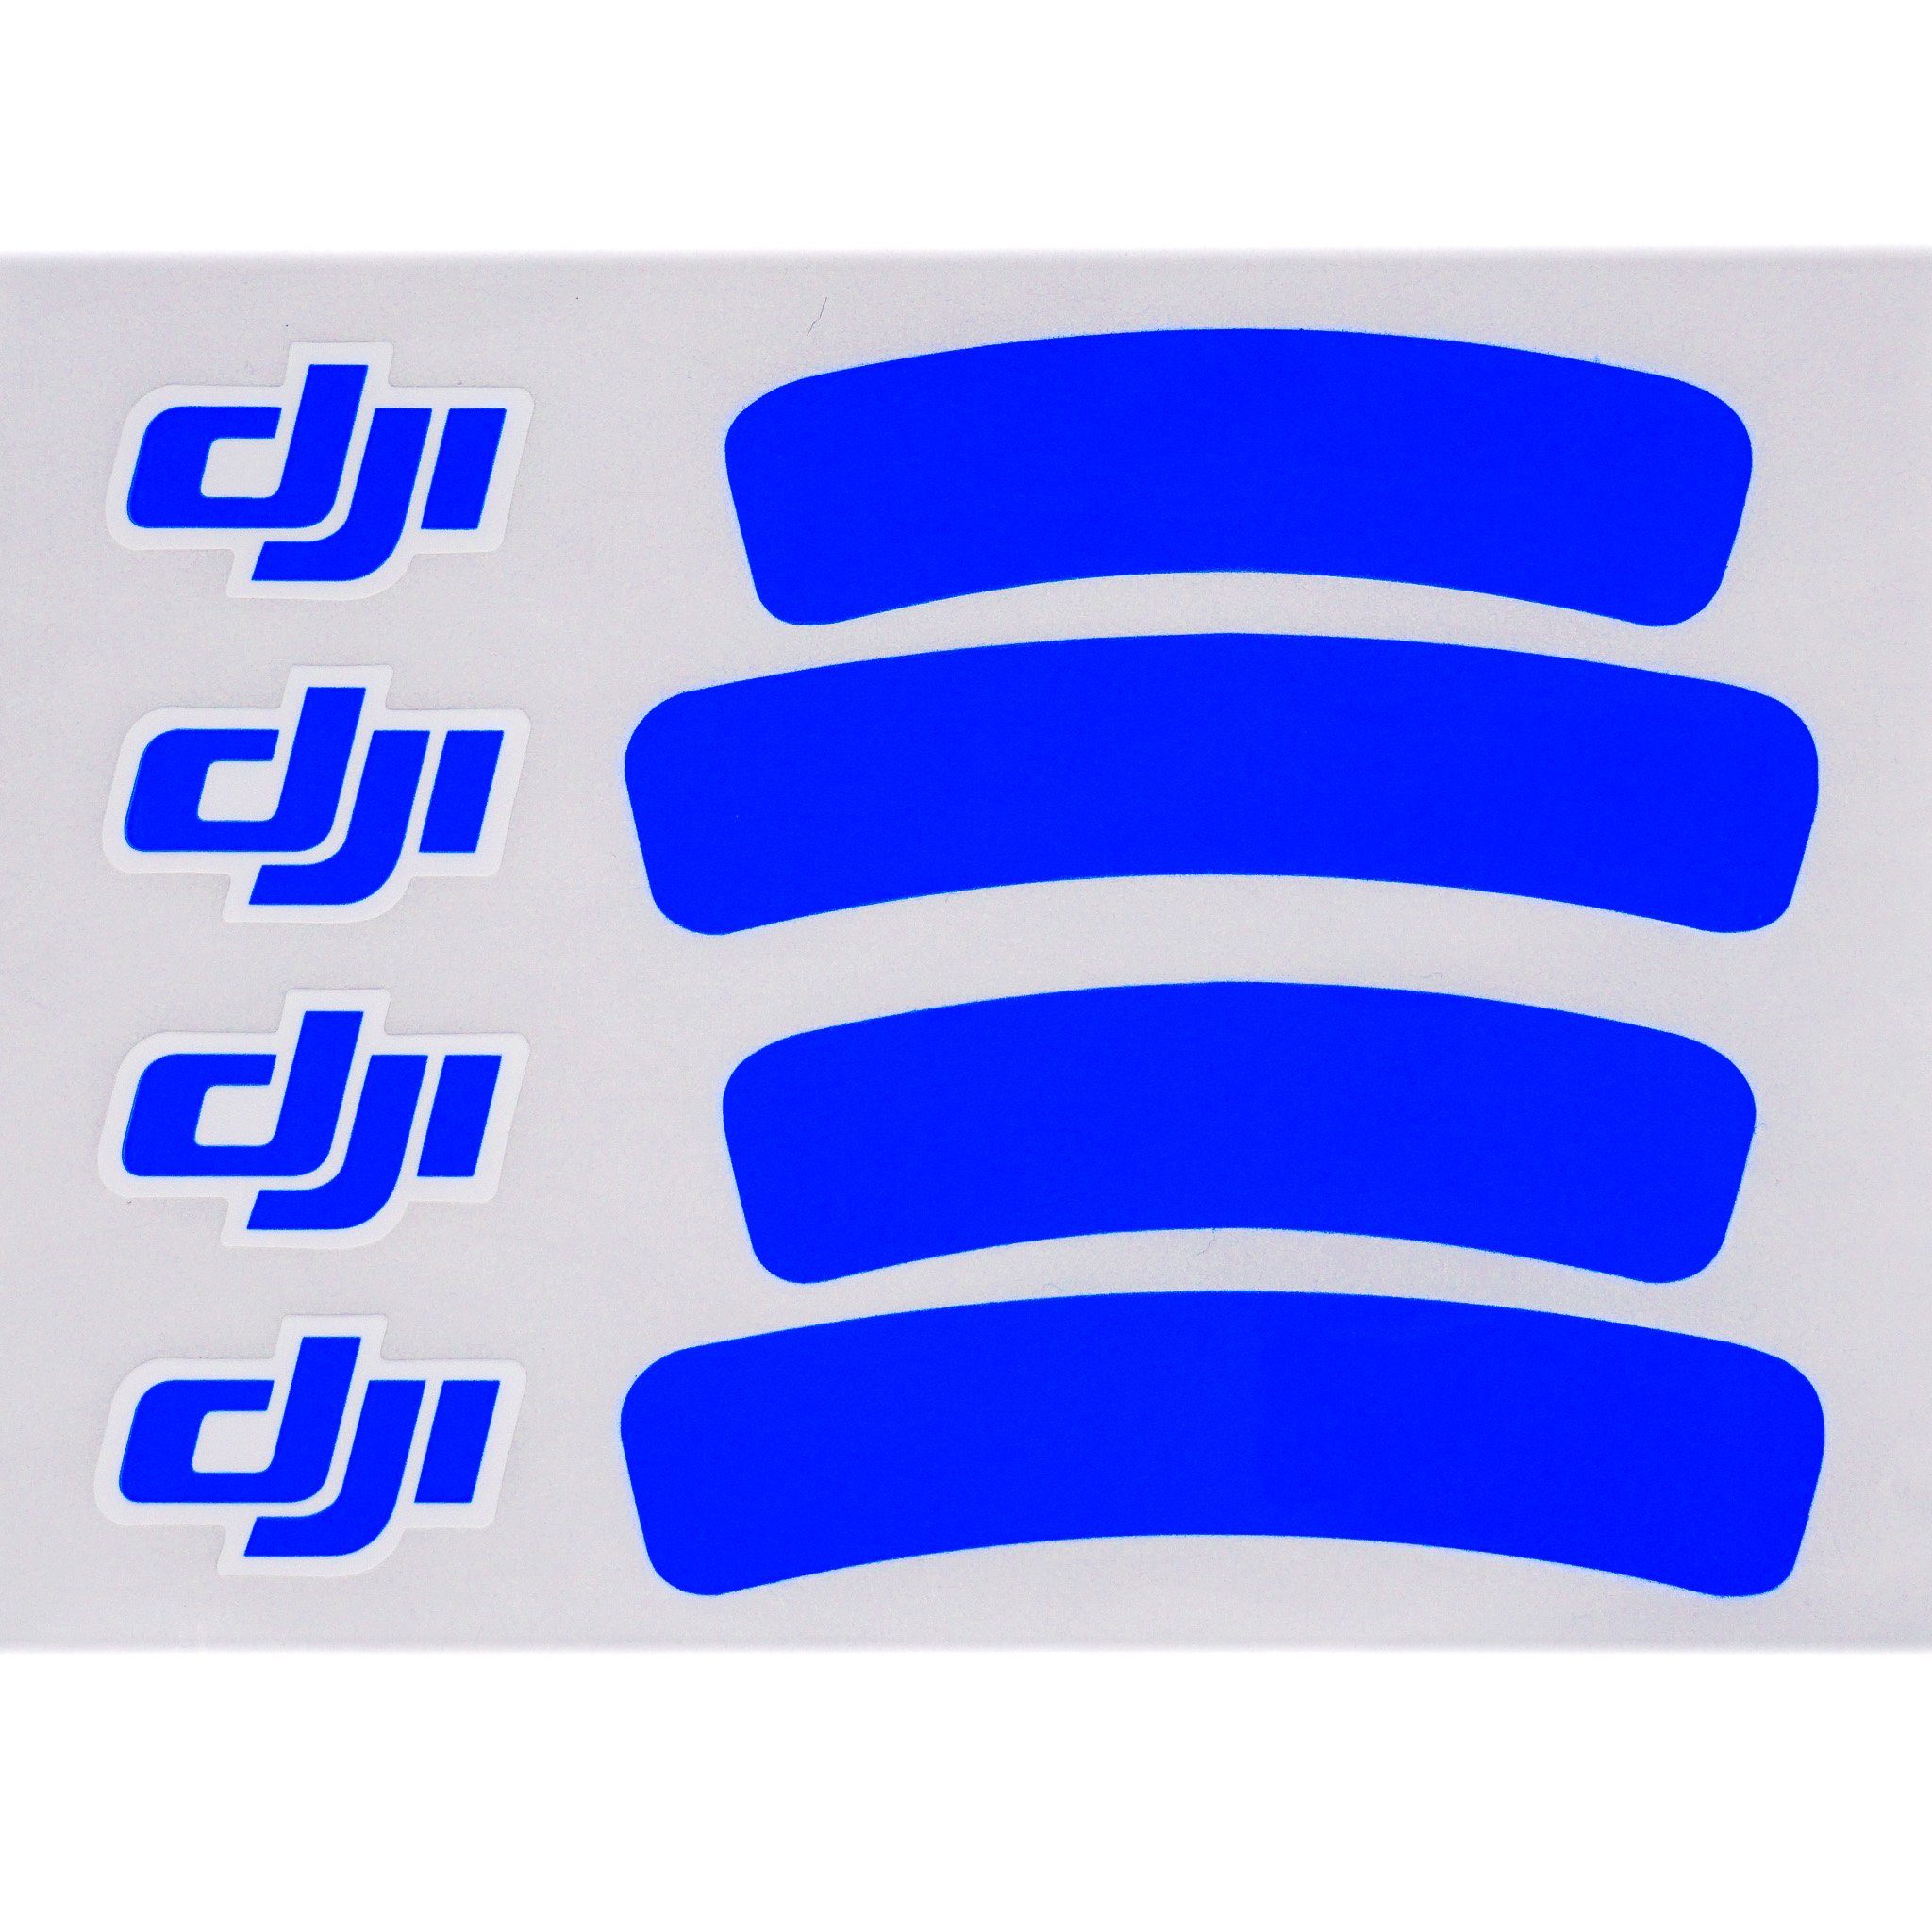 Drohne Zubehör DJI Logo & Produkt) Original Phantom Aufkleber blue (DJI, DJI 3 Blau Sticker 2 Sticker, Original DJI DJI Original